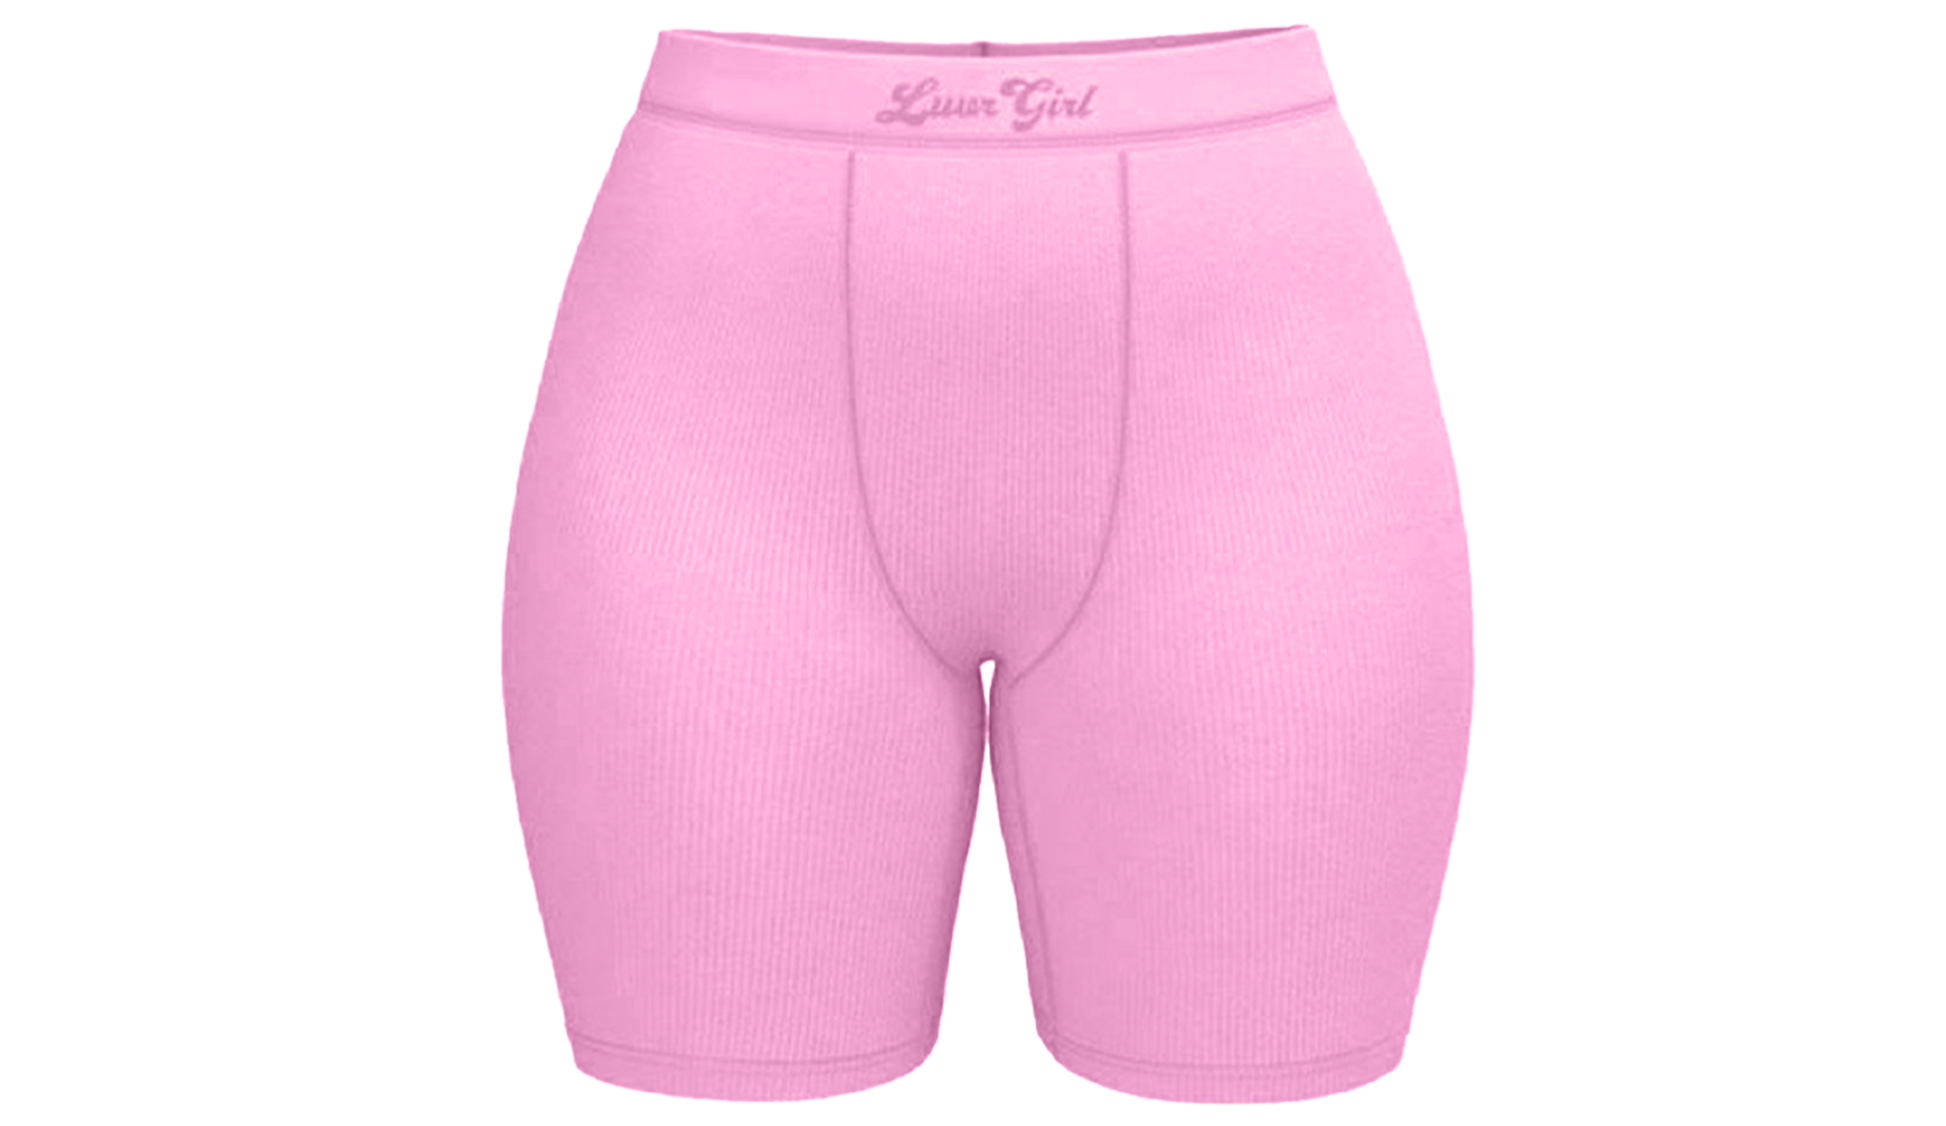 Lounge Shorts - Baby Pink